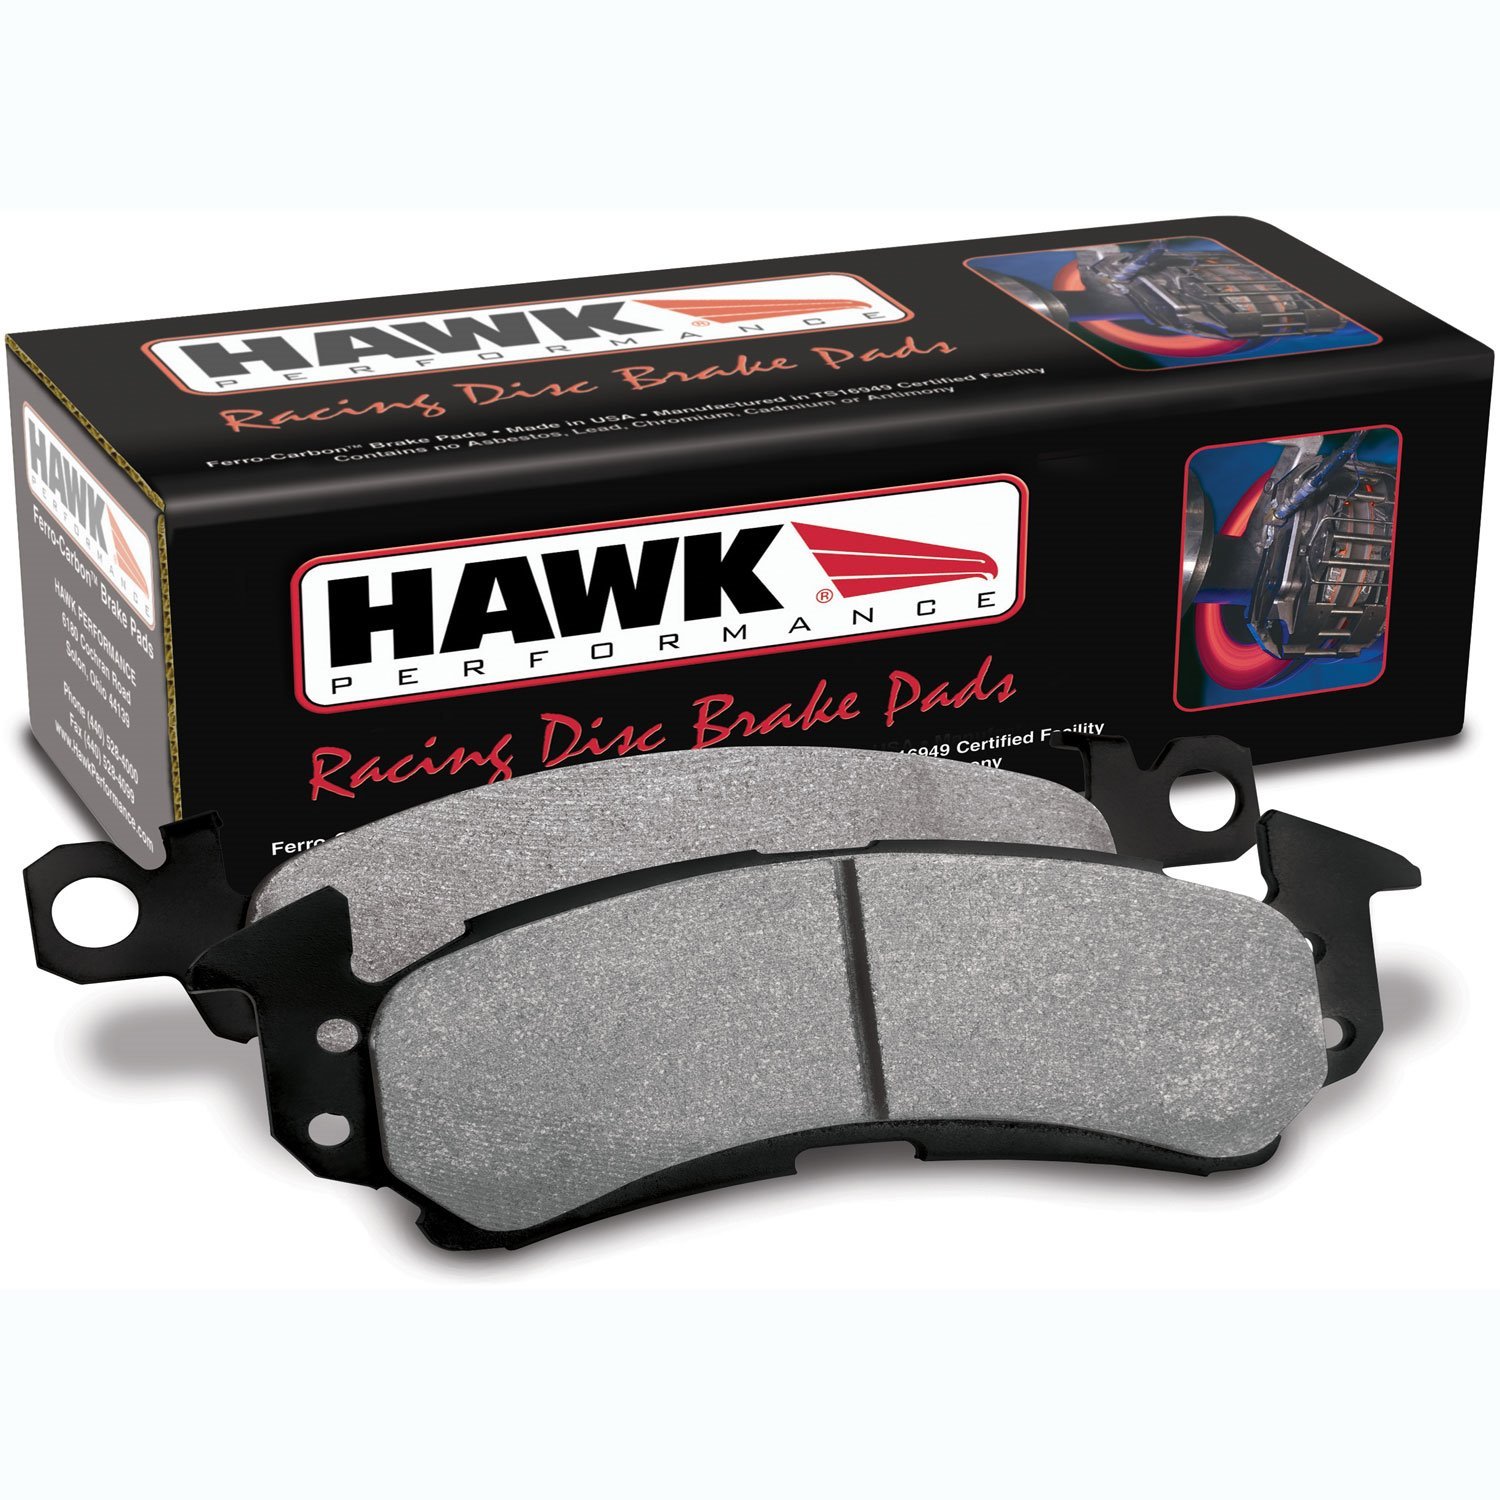 Disc Brake Pad HP Plus w/0.714 Thickness